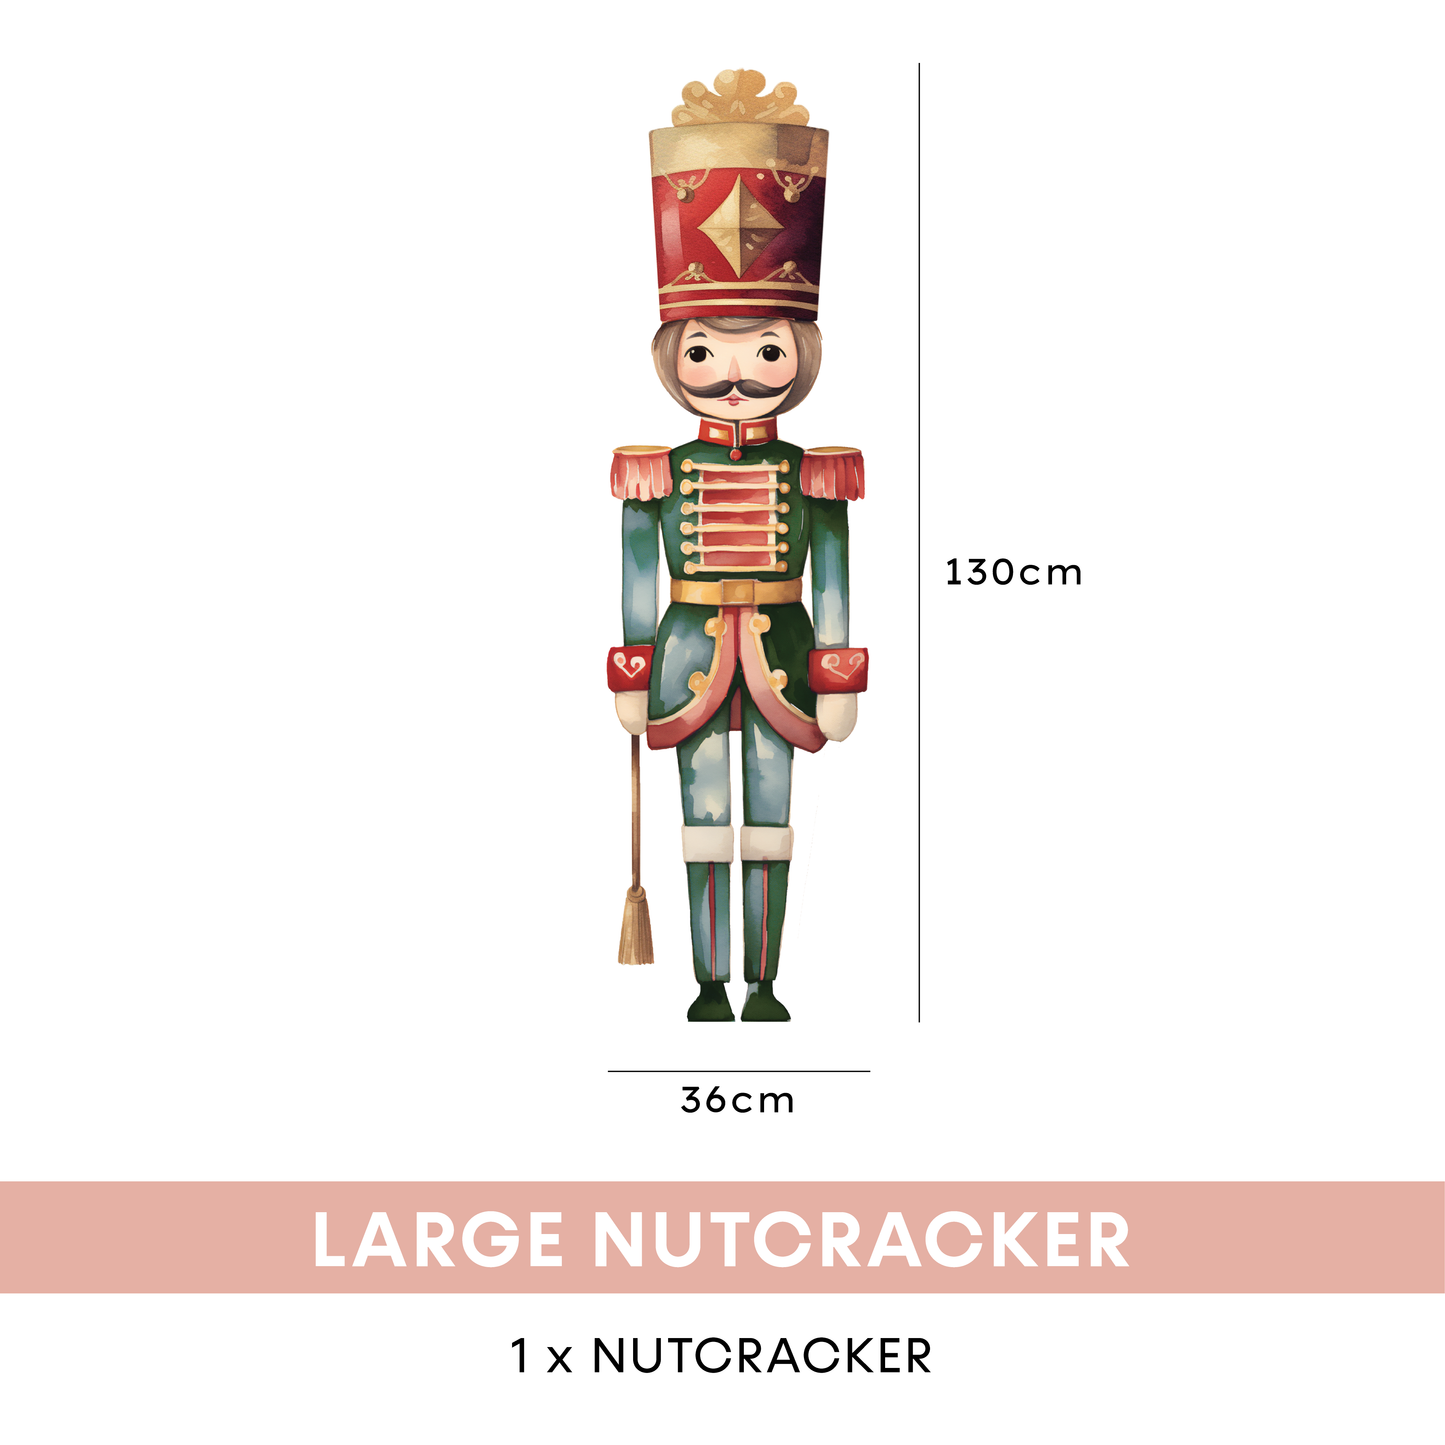 Nutcracker Wall Decal